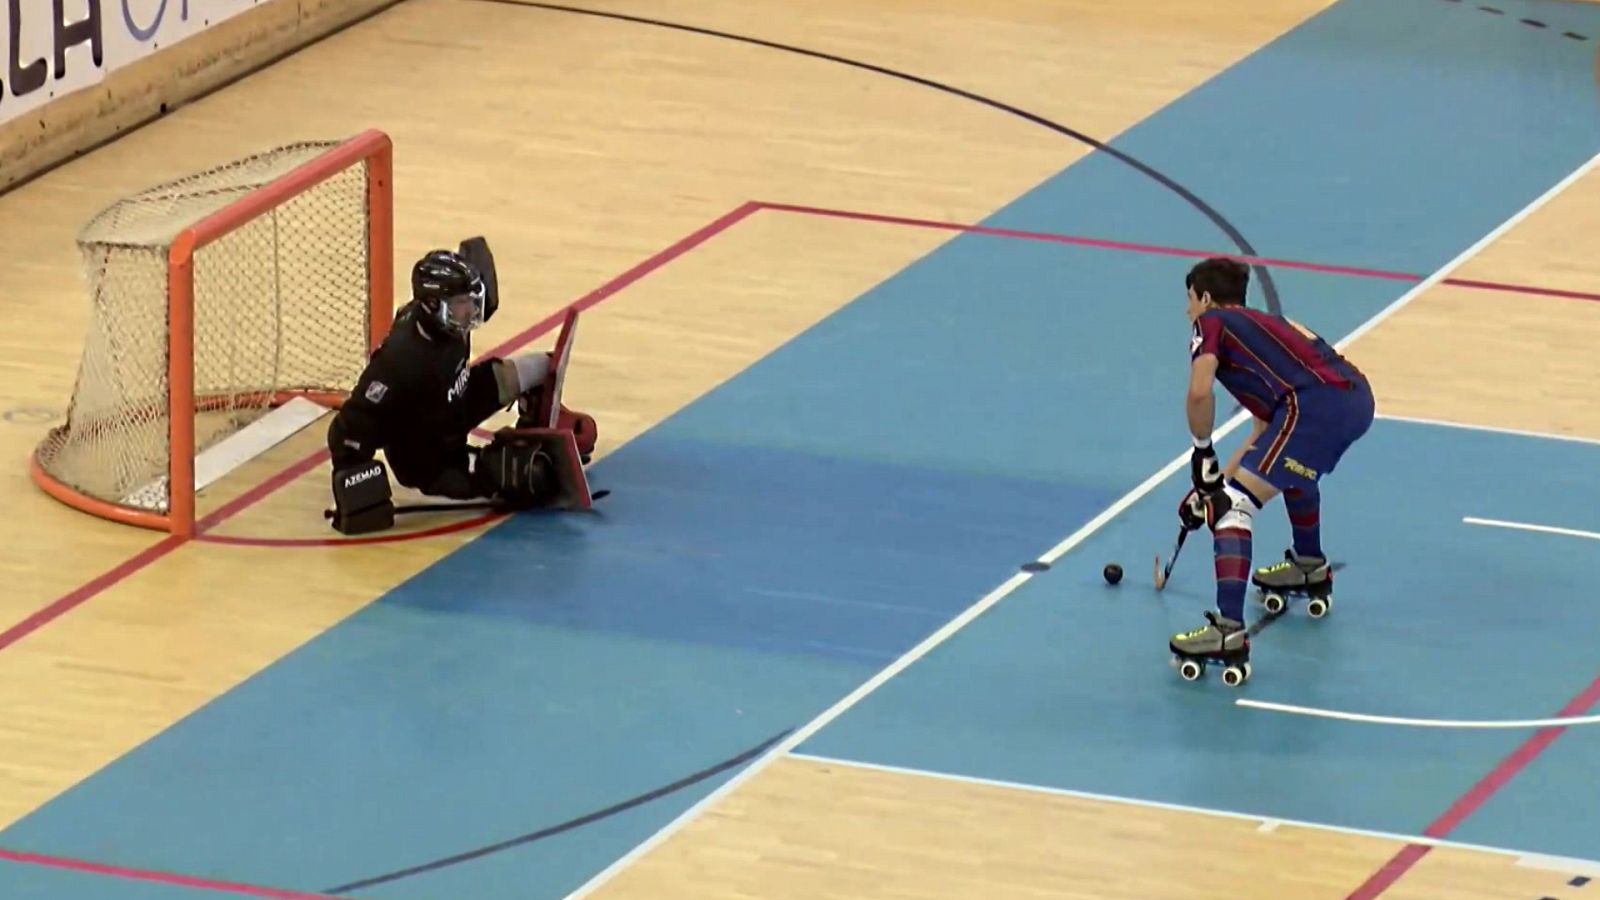 Hockey patines - Copa del Rey. 2ª semifinal: Reus Deportiu Miró - Barça